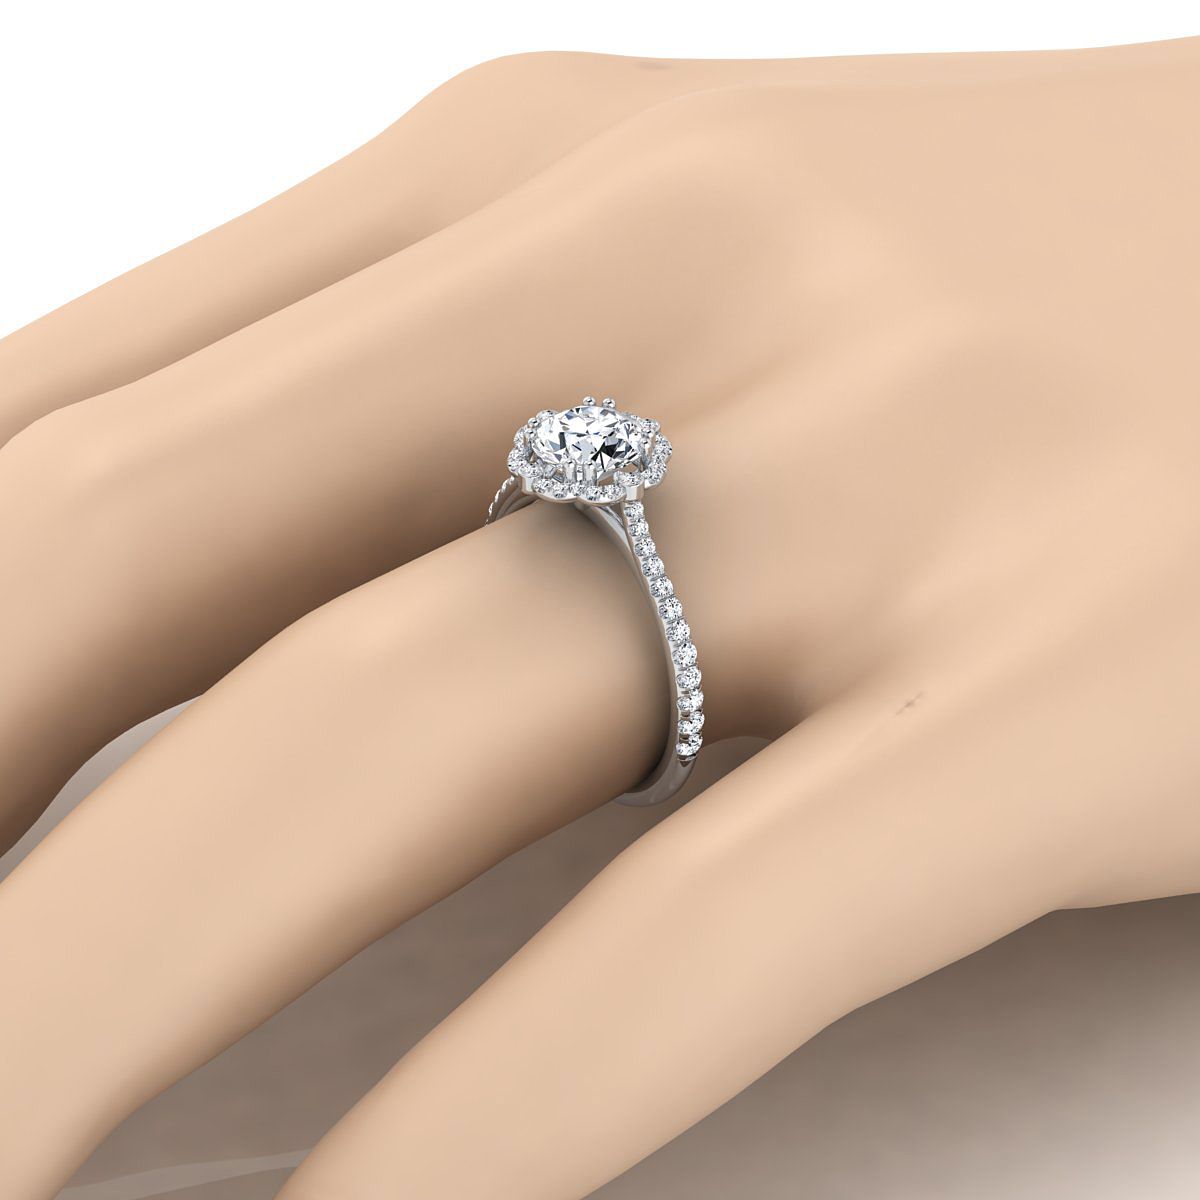 Platinum Round Brilliant Pink Sapphire Ornate Diamond Halo Vintage Inspired Engagement Ring -1/4ctw